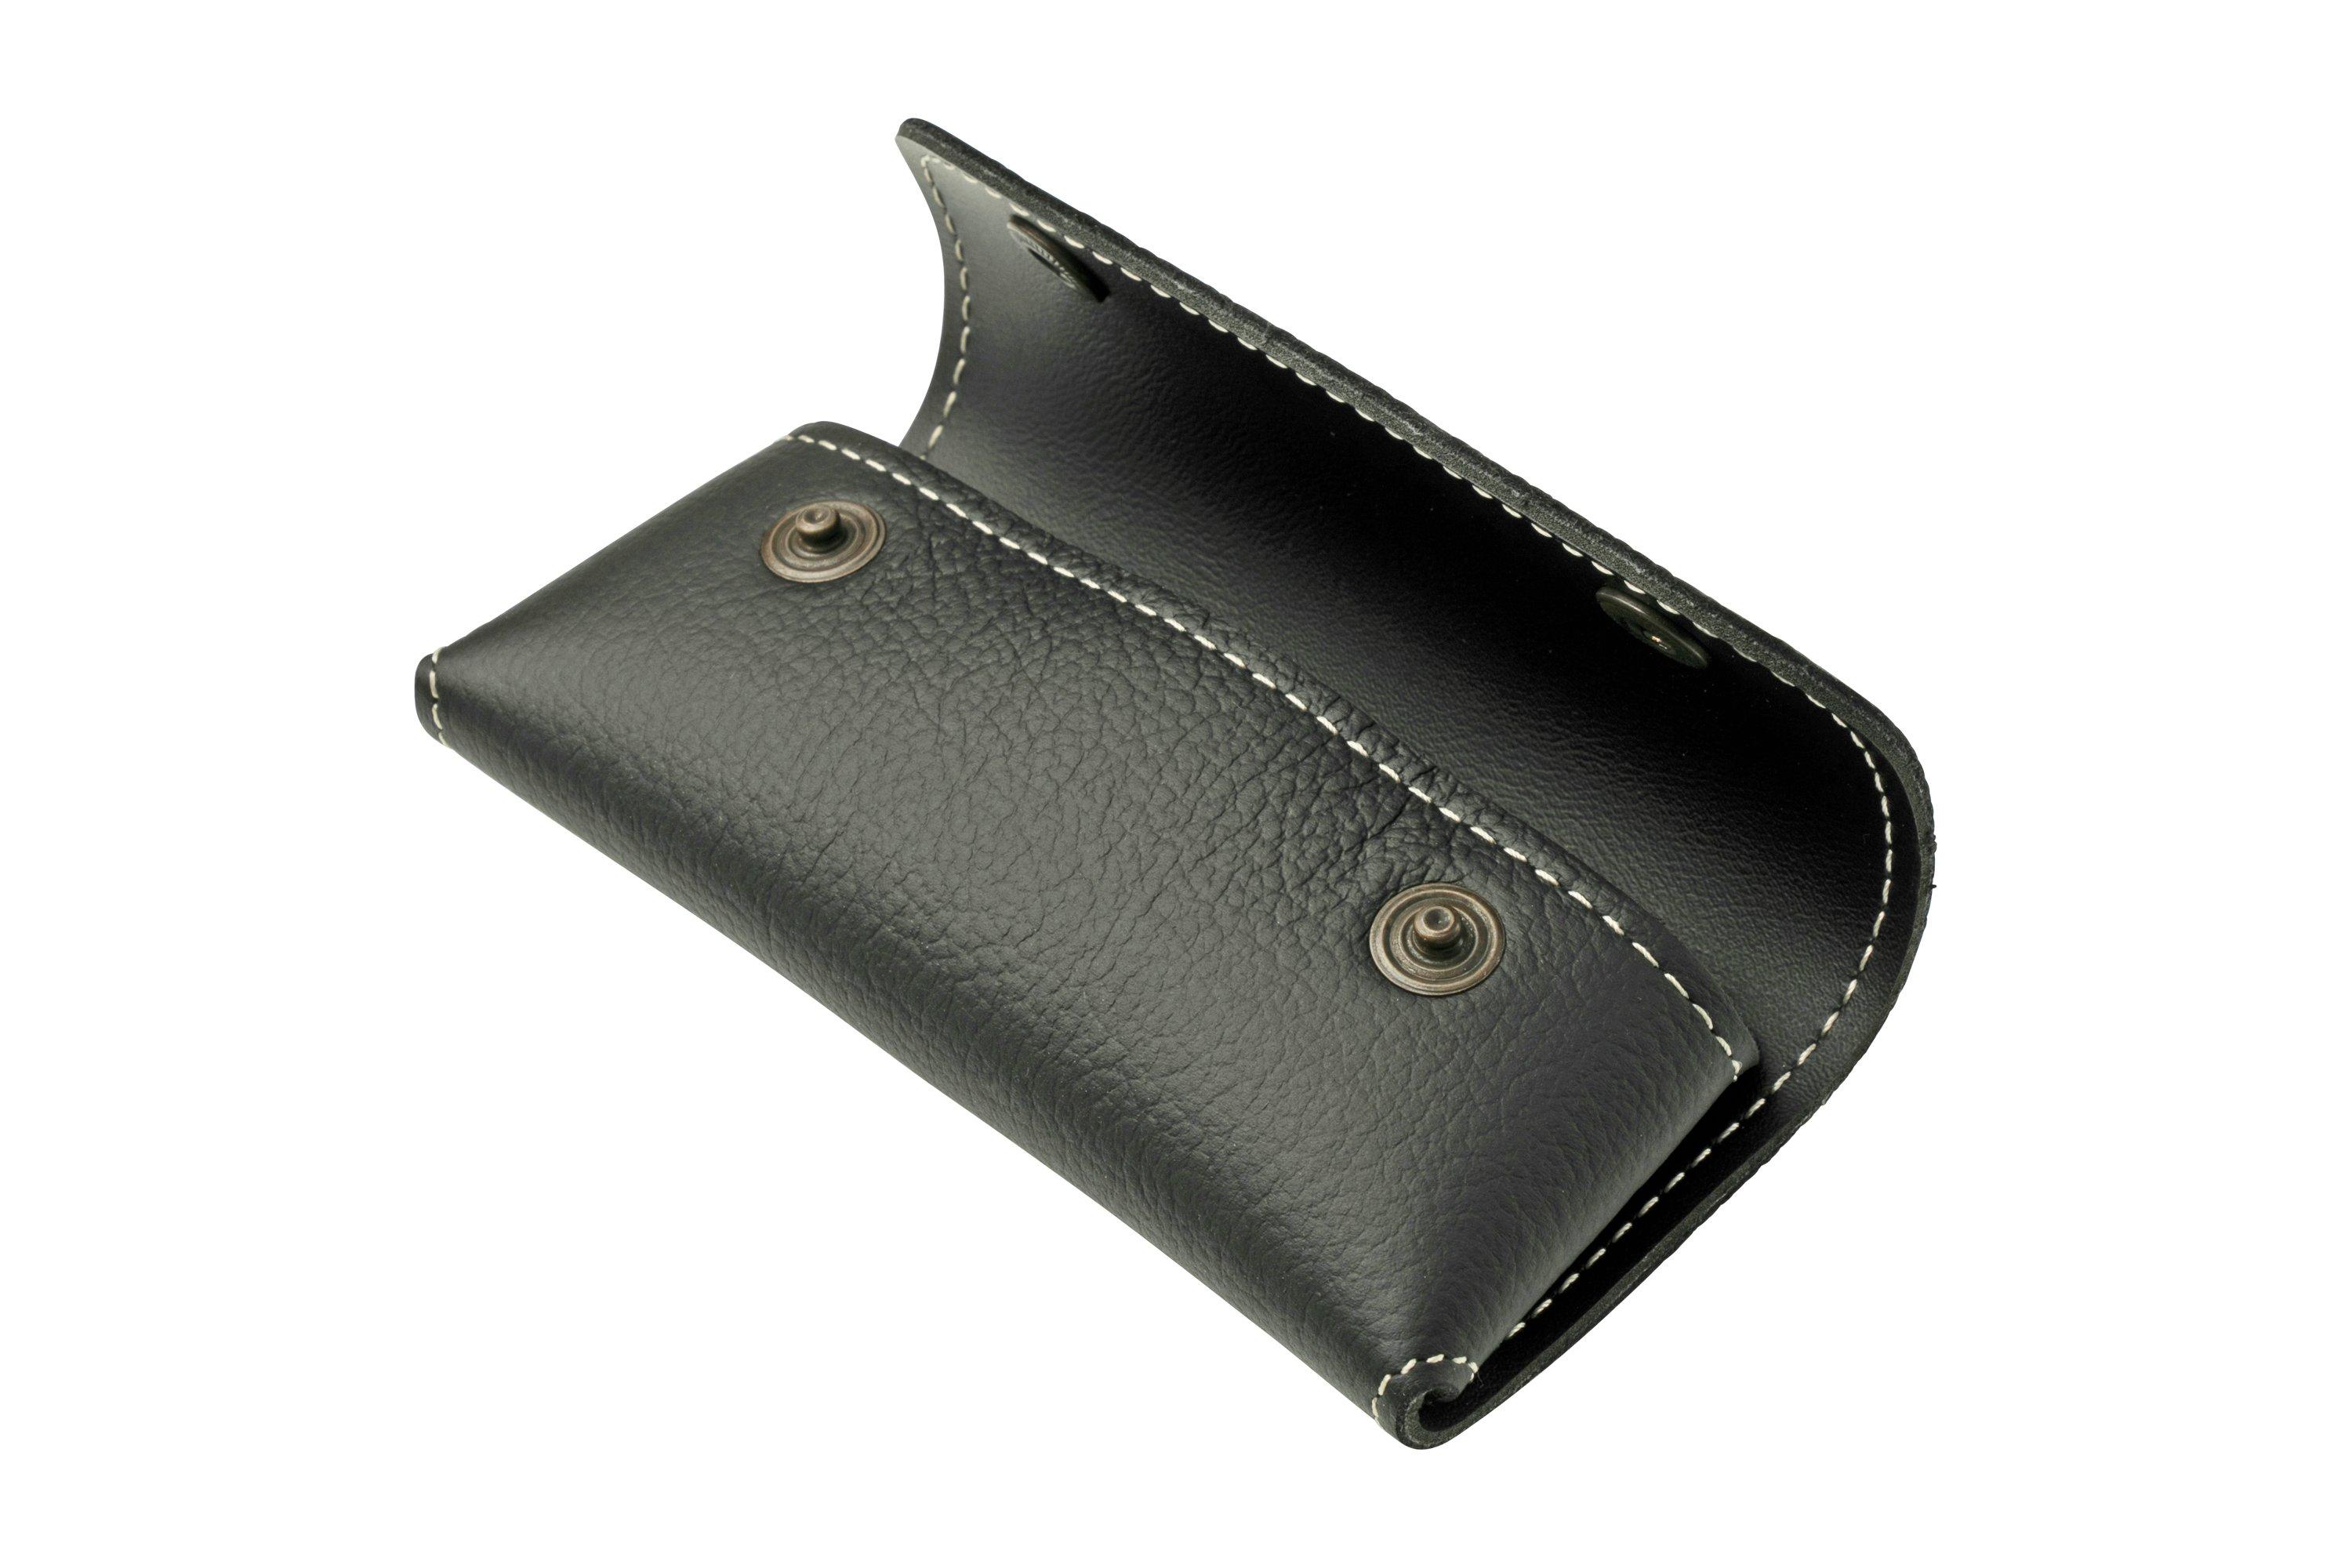 Lionsteel 900FD01 PL sheath large, black leather | Advantageously ...